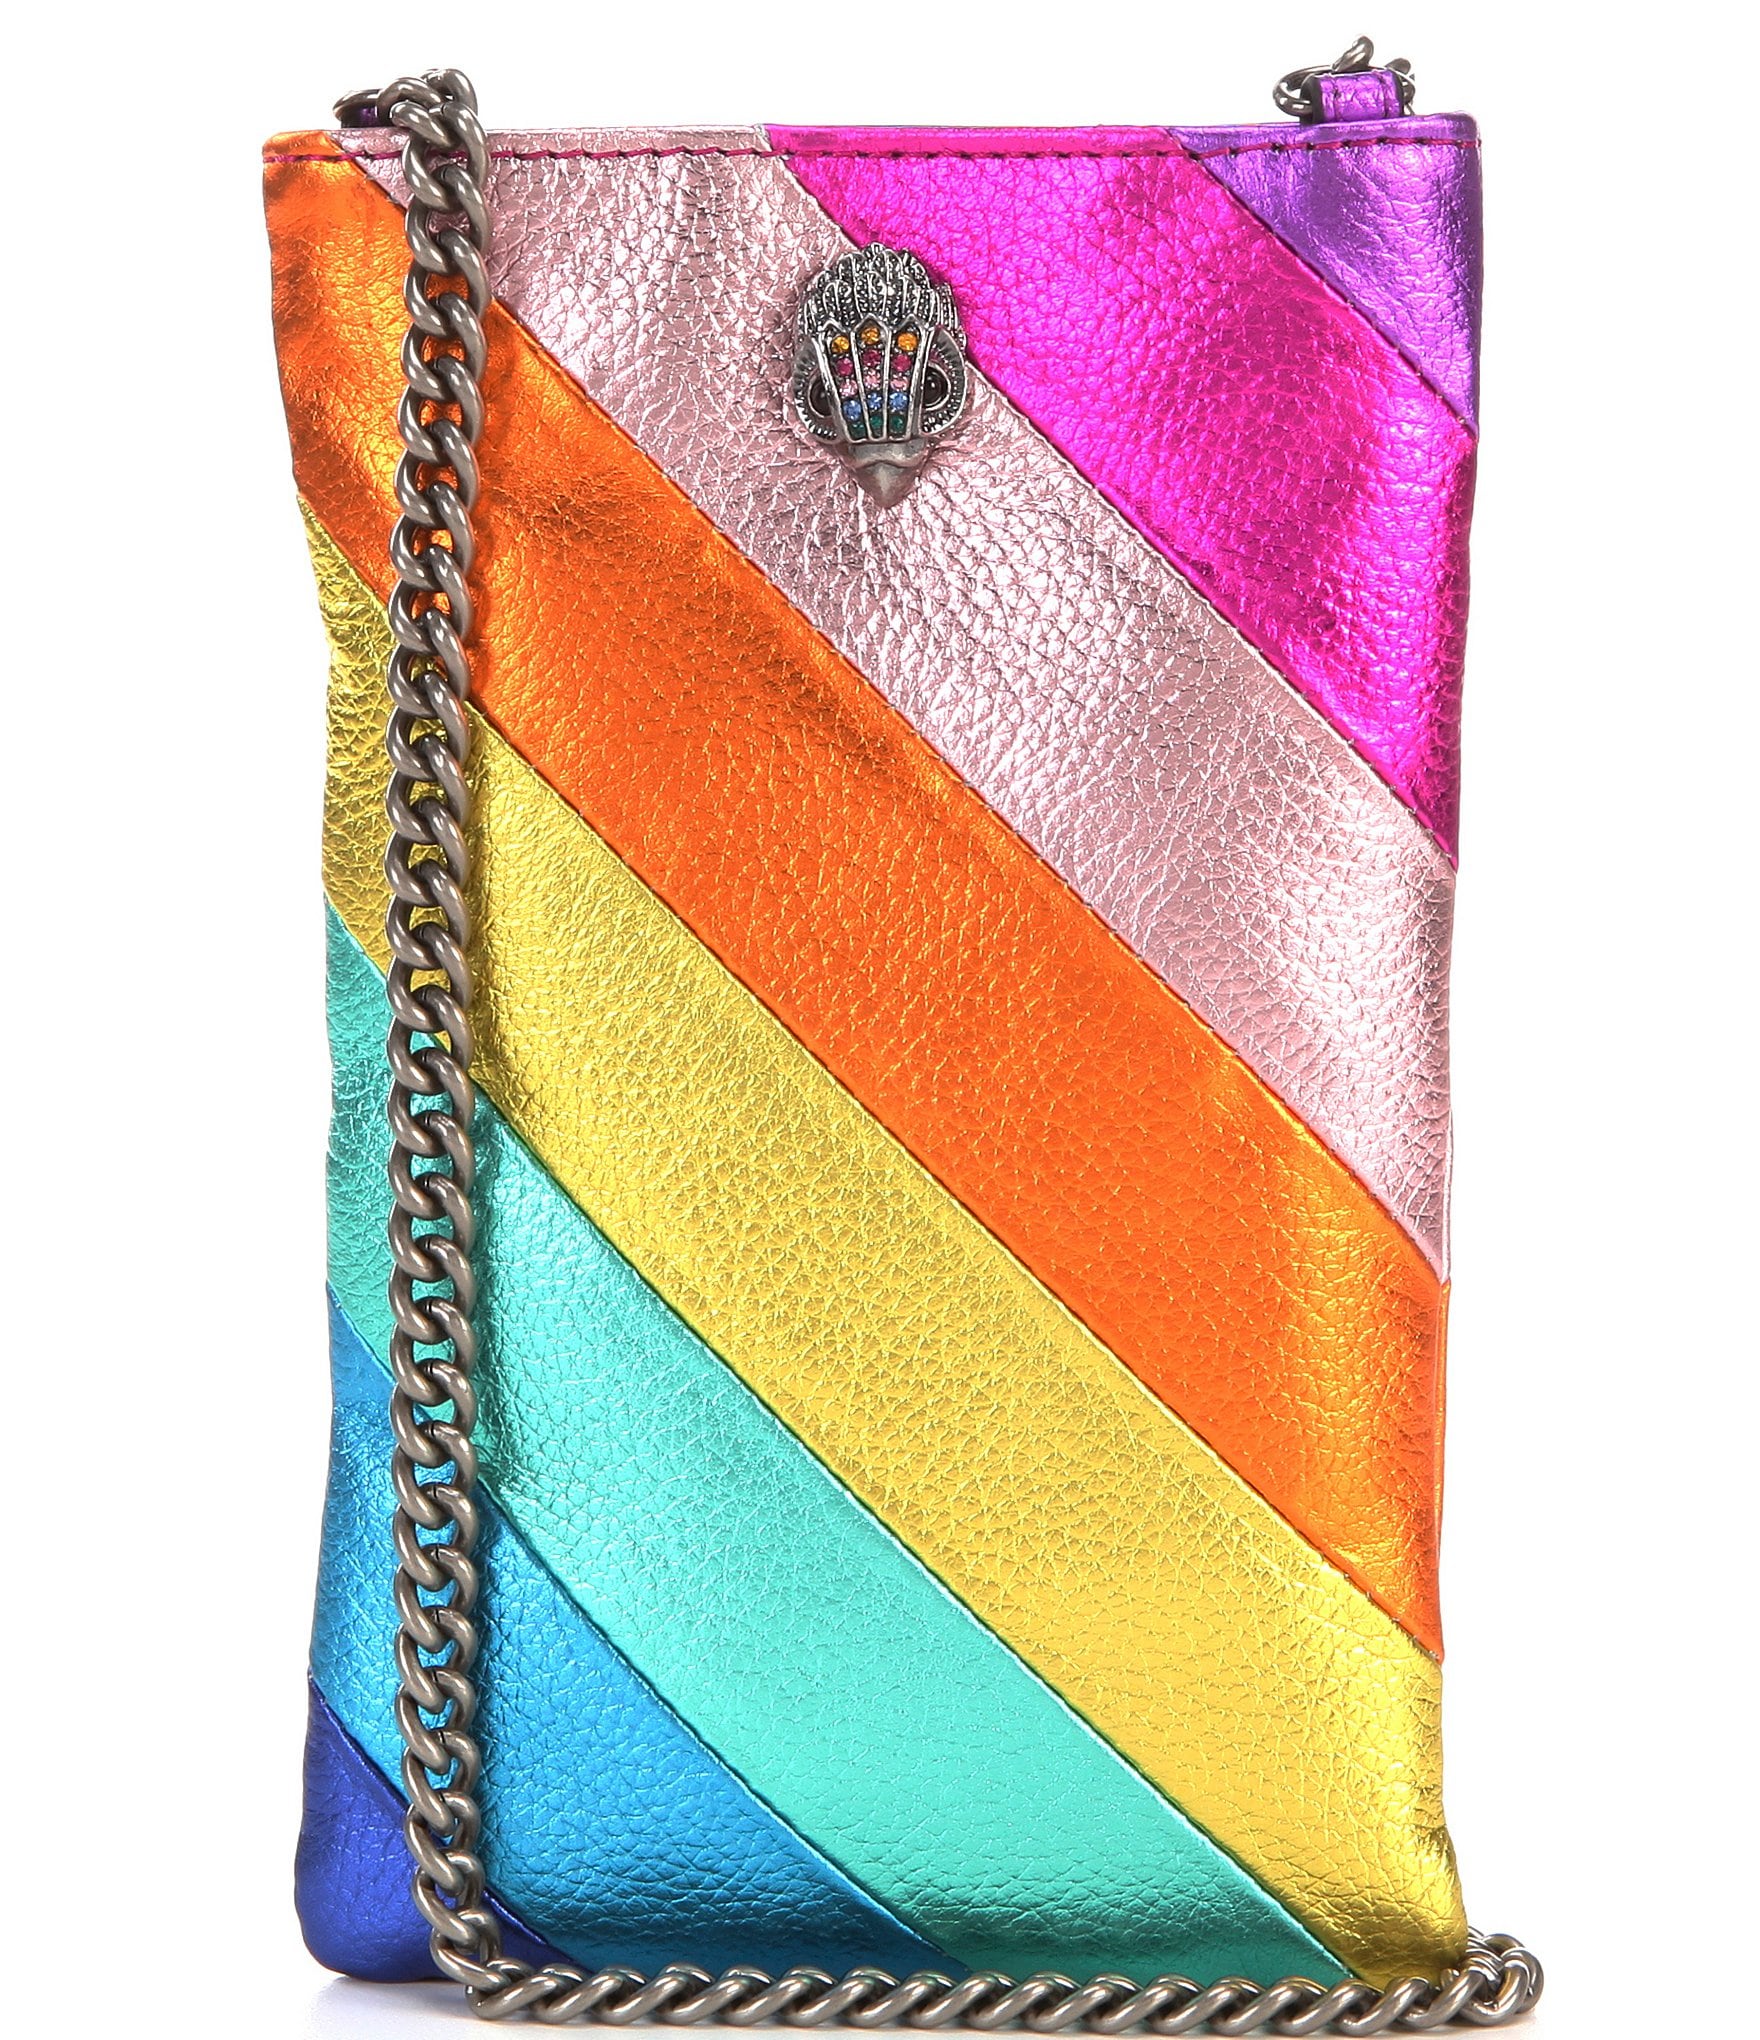 Kurt Geiger London Kensington Metallic Rainbow Phone Crossbody Bag